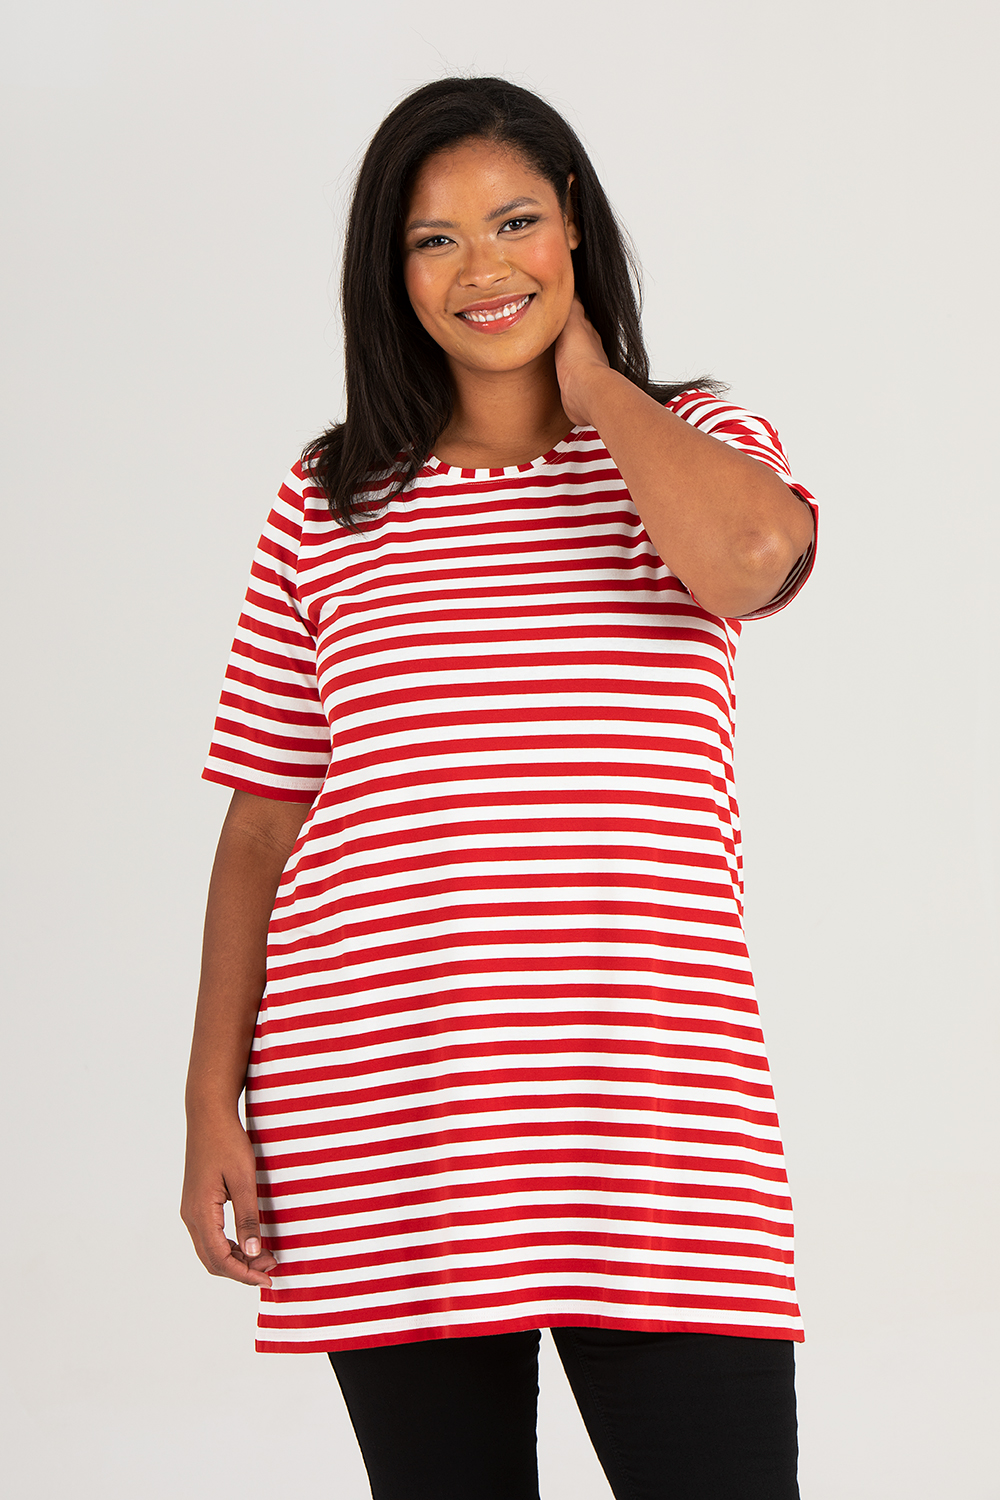 Penny dress/tunic red/white • Plus sizes • AliceDot.